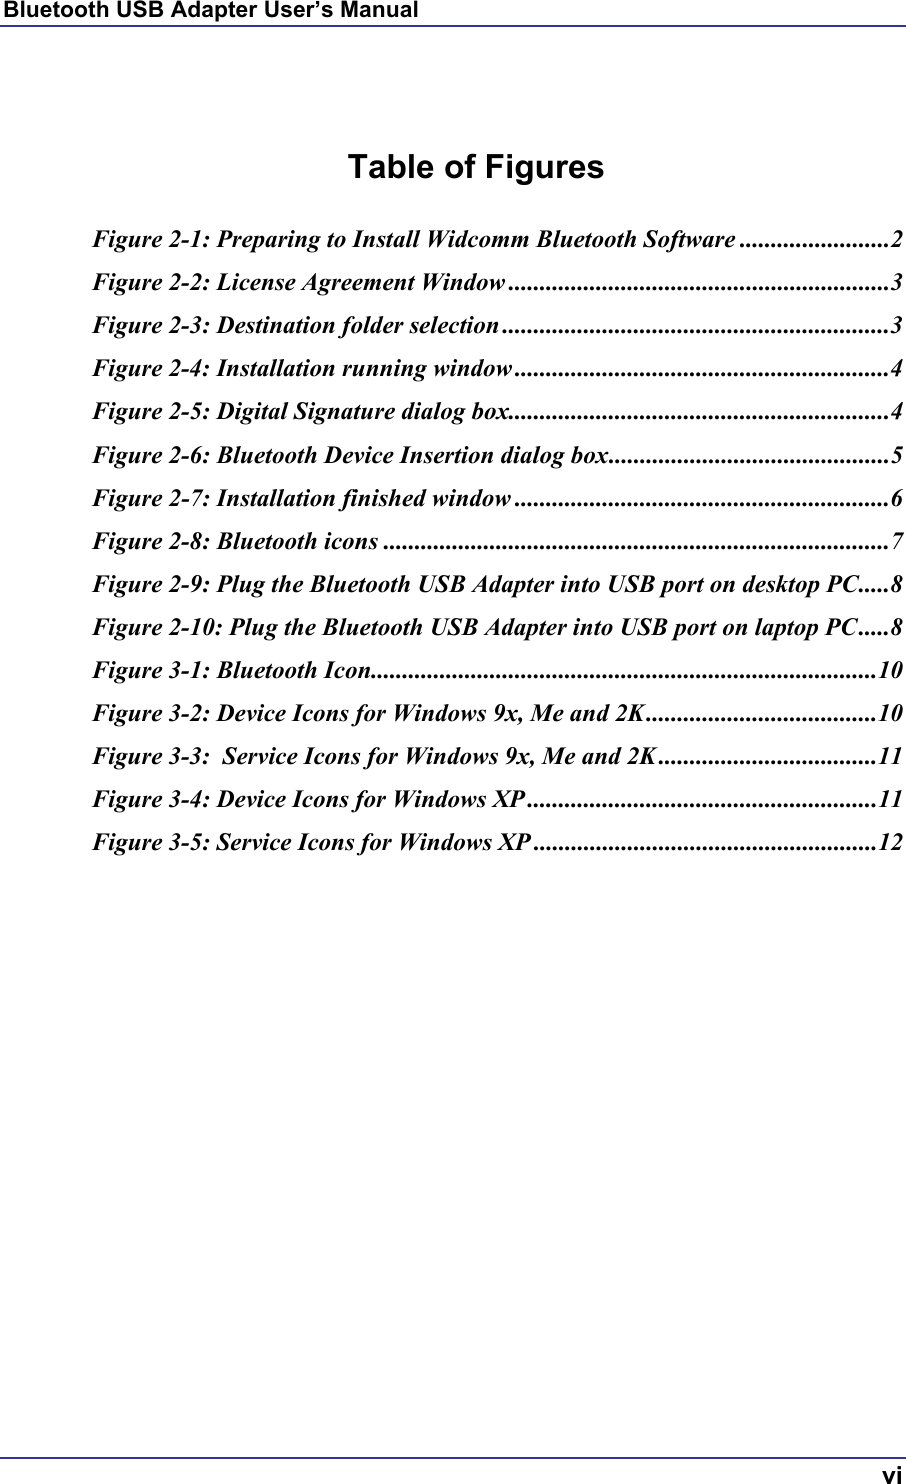 Bluetooth USB Adapter User’s Manual   Table of Figures  Figure 2-1: Preparing to Install Widcomm Bluetooth Software ........................2 Figure 2-2: License Agreement Window .............................................................3 Figure 2-3: Destination folder selection ..............................................................3 Figure 2-4: Installation running window ............................................................4 Figure 2-5: Digital Signature dialog box.............................................................4 Figure 2-6: Bluetooth Device Insertion dialog box.............................................5 Figure 2-7: Installation finished window ............................................................6 Figure 2-8: Bluetooth icons .................................................................................7 Figure 2-9: Plug the Bluetooth USB Adapter into USB port on desktop PC.....8 Figure 2-10: Plug the Bluetooth USB Adapter into USB port on laptop PC.....8 Figure 3-1: Bluetooth Icon.................................................................................10 Figure 3-2: Device Icons for Windows 9x, Me and 2K.....................................10 Figure 3-3:  Service Icons for Windows 9x, Me and 2K ...................................11 Figure 3-4: Device Icons for Windows XP ........................................................11 Figure 3-5: Service Icons for Windows XP .......................................................12    vi 